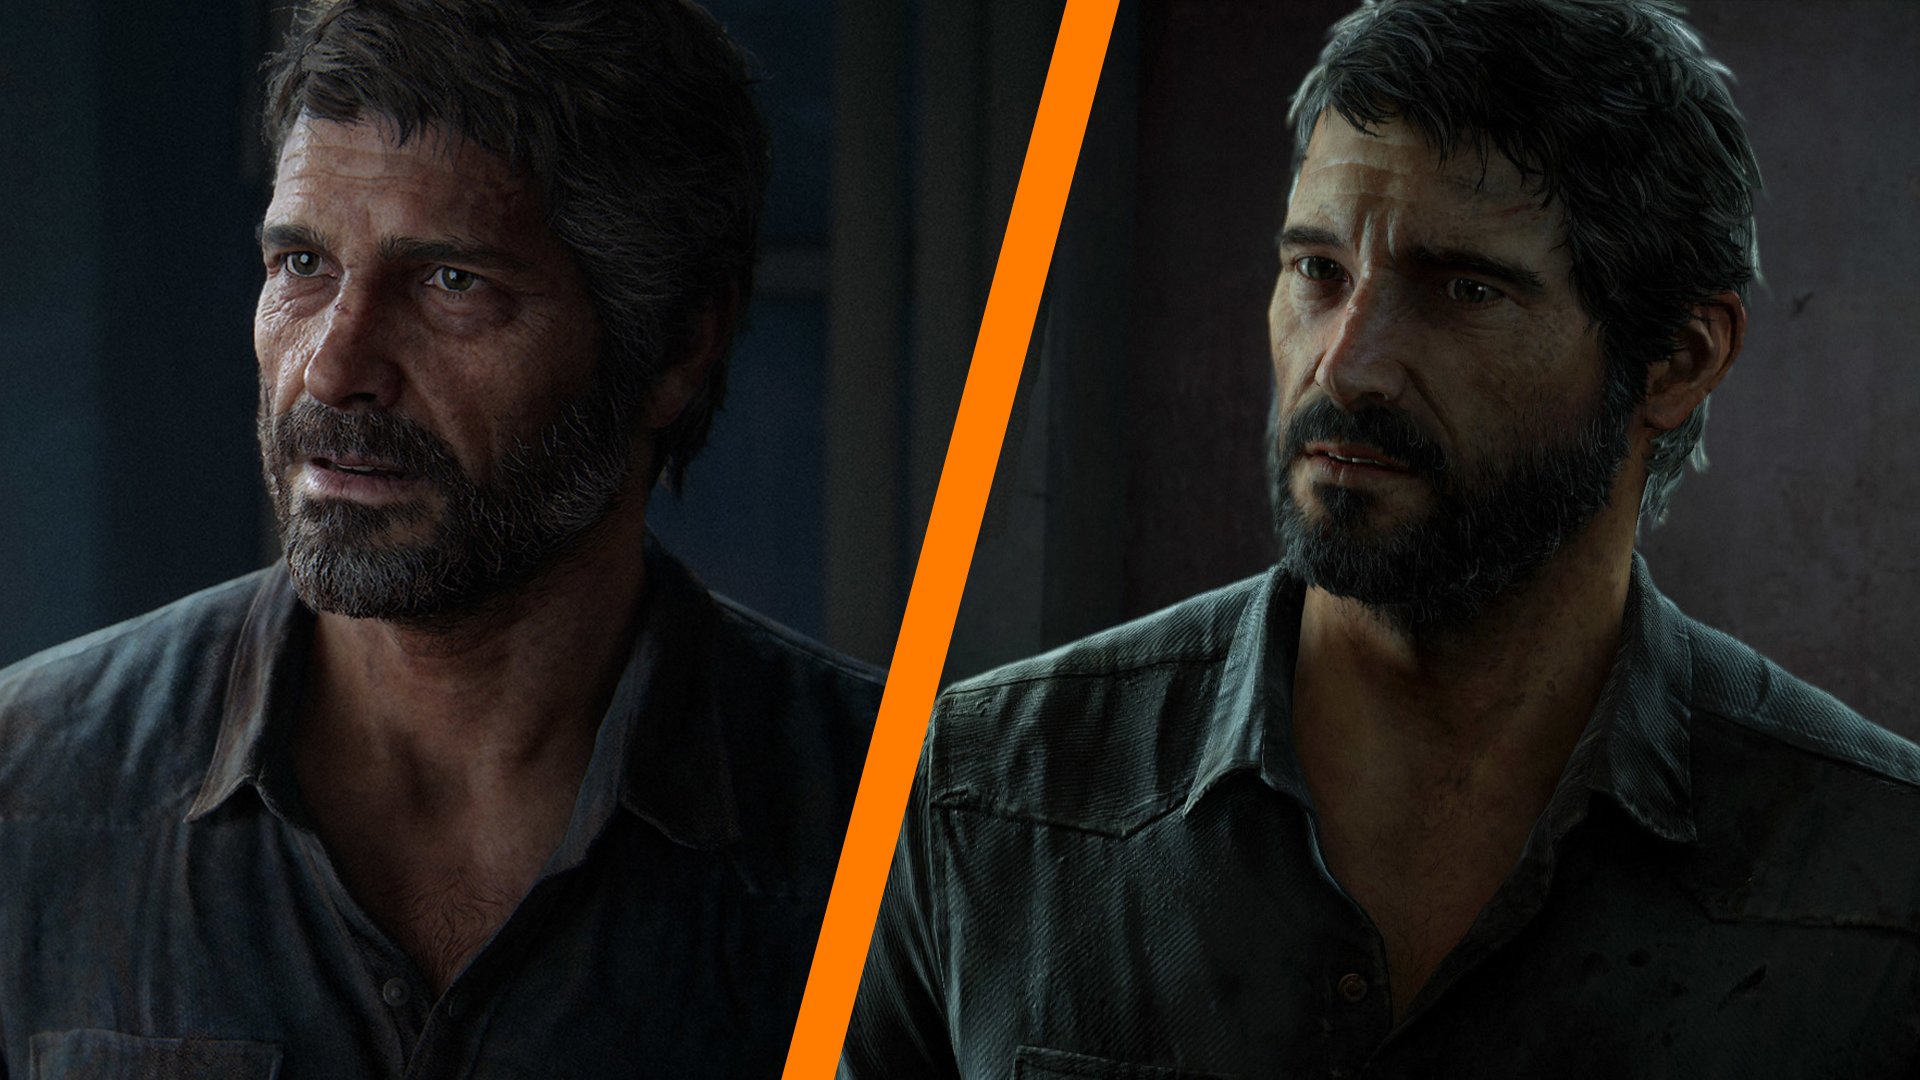 The Last of Us Remake Release Date, Trailer, & Screen Shots Leak